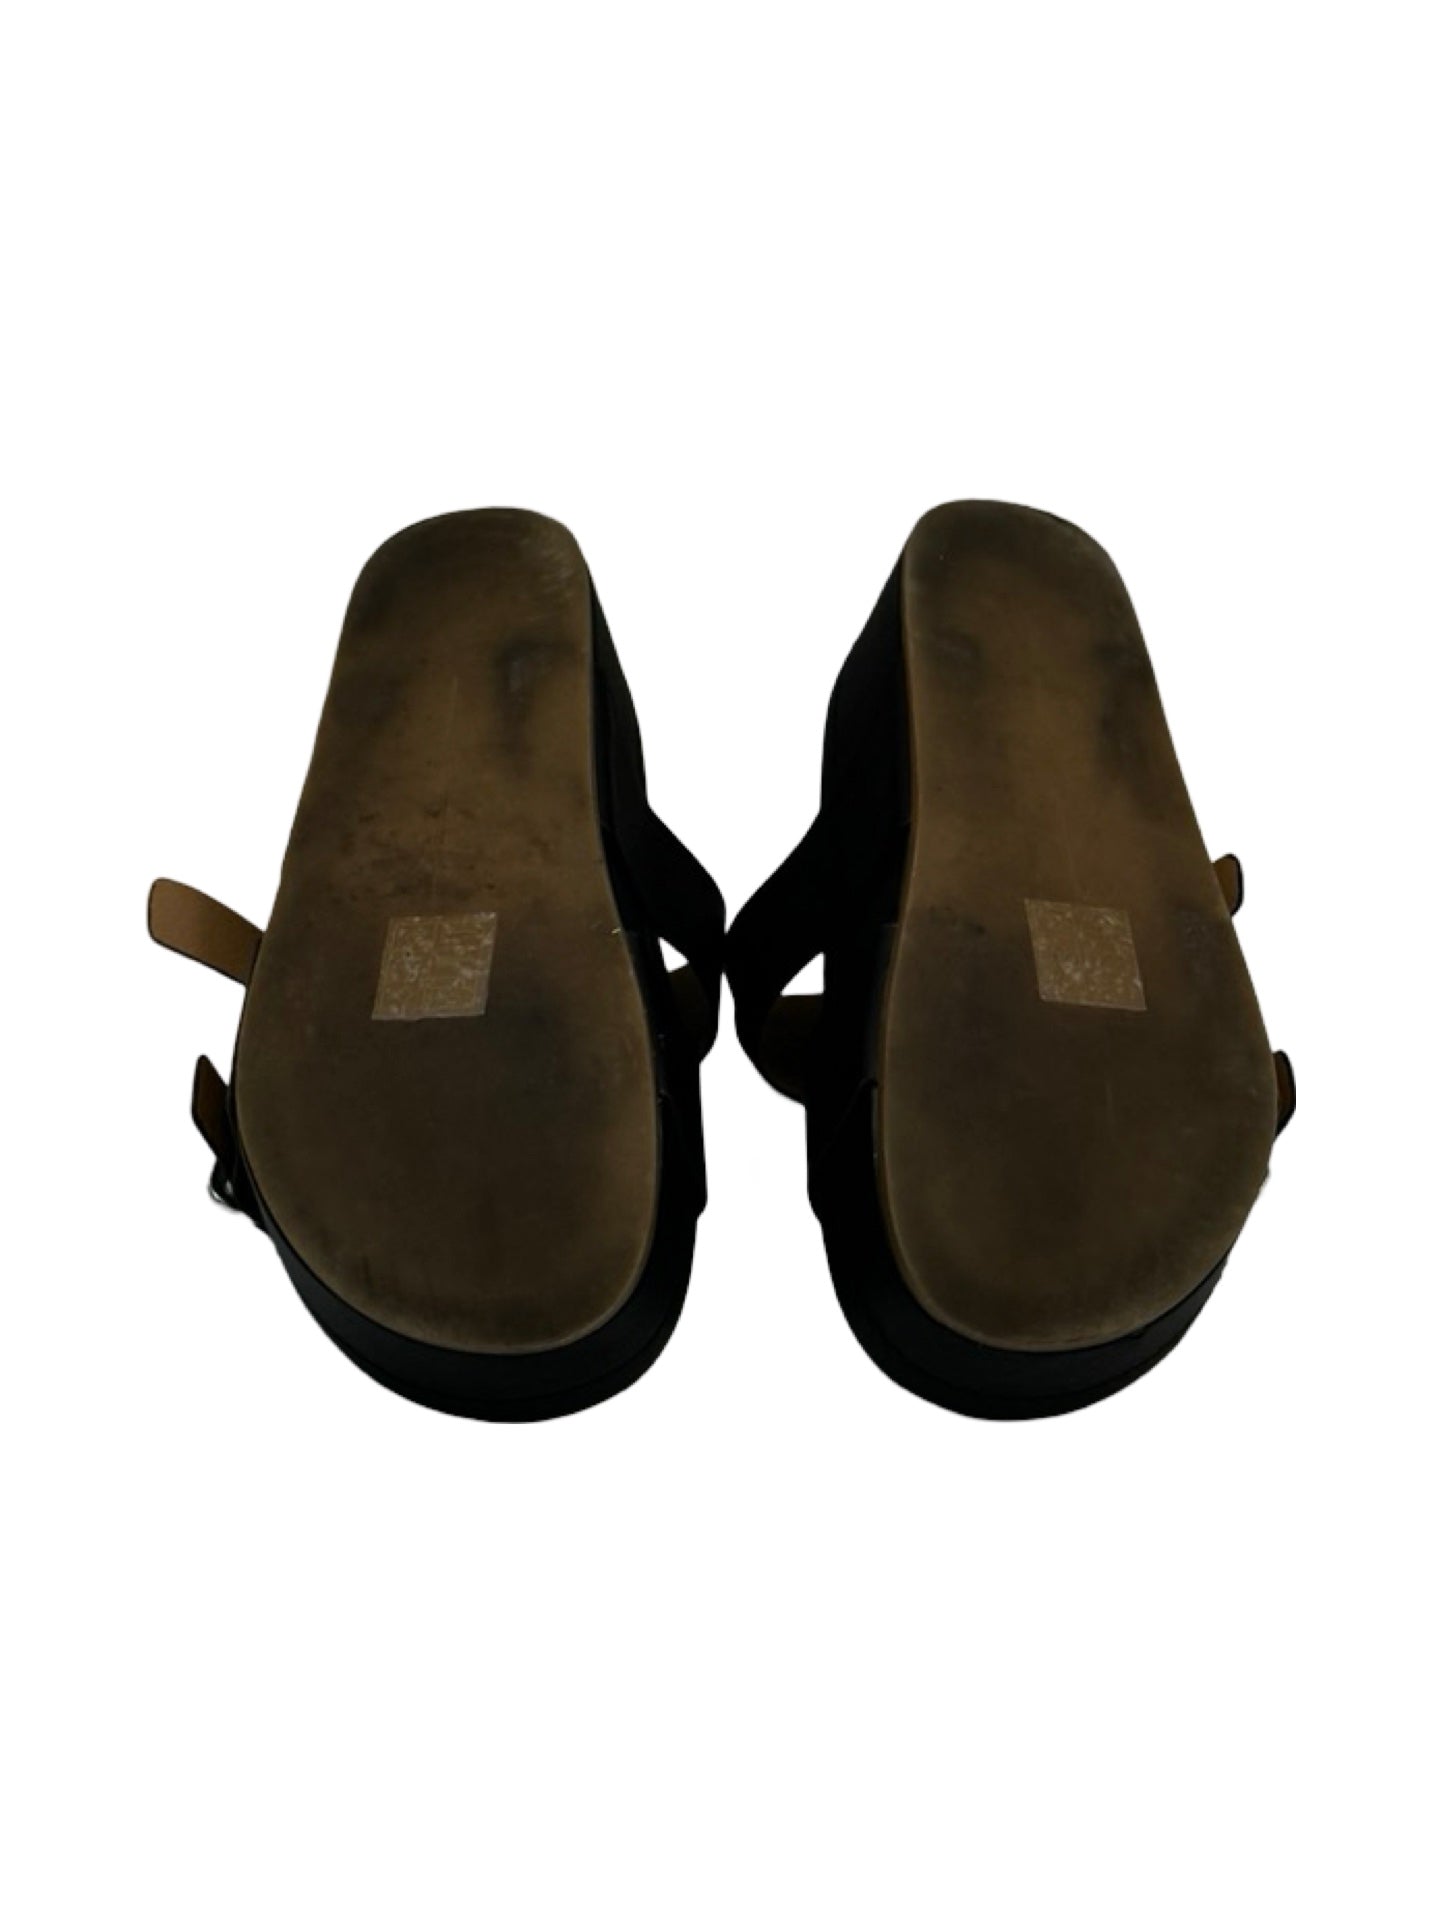 Black Shoes Flats Dolce Vita, Size 6.5